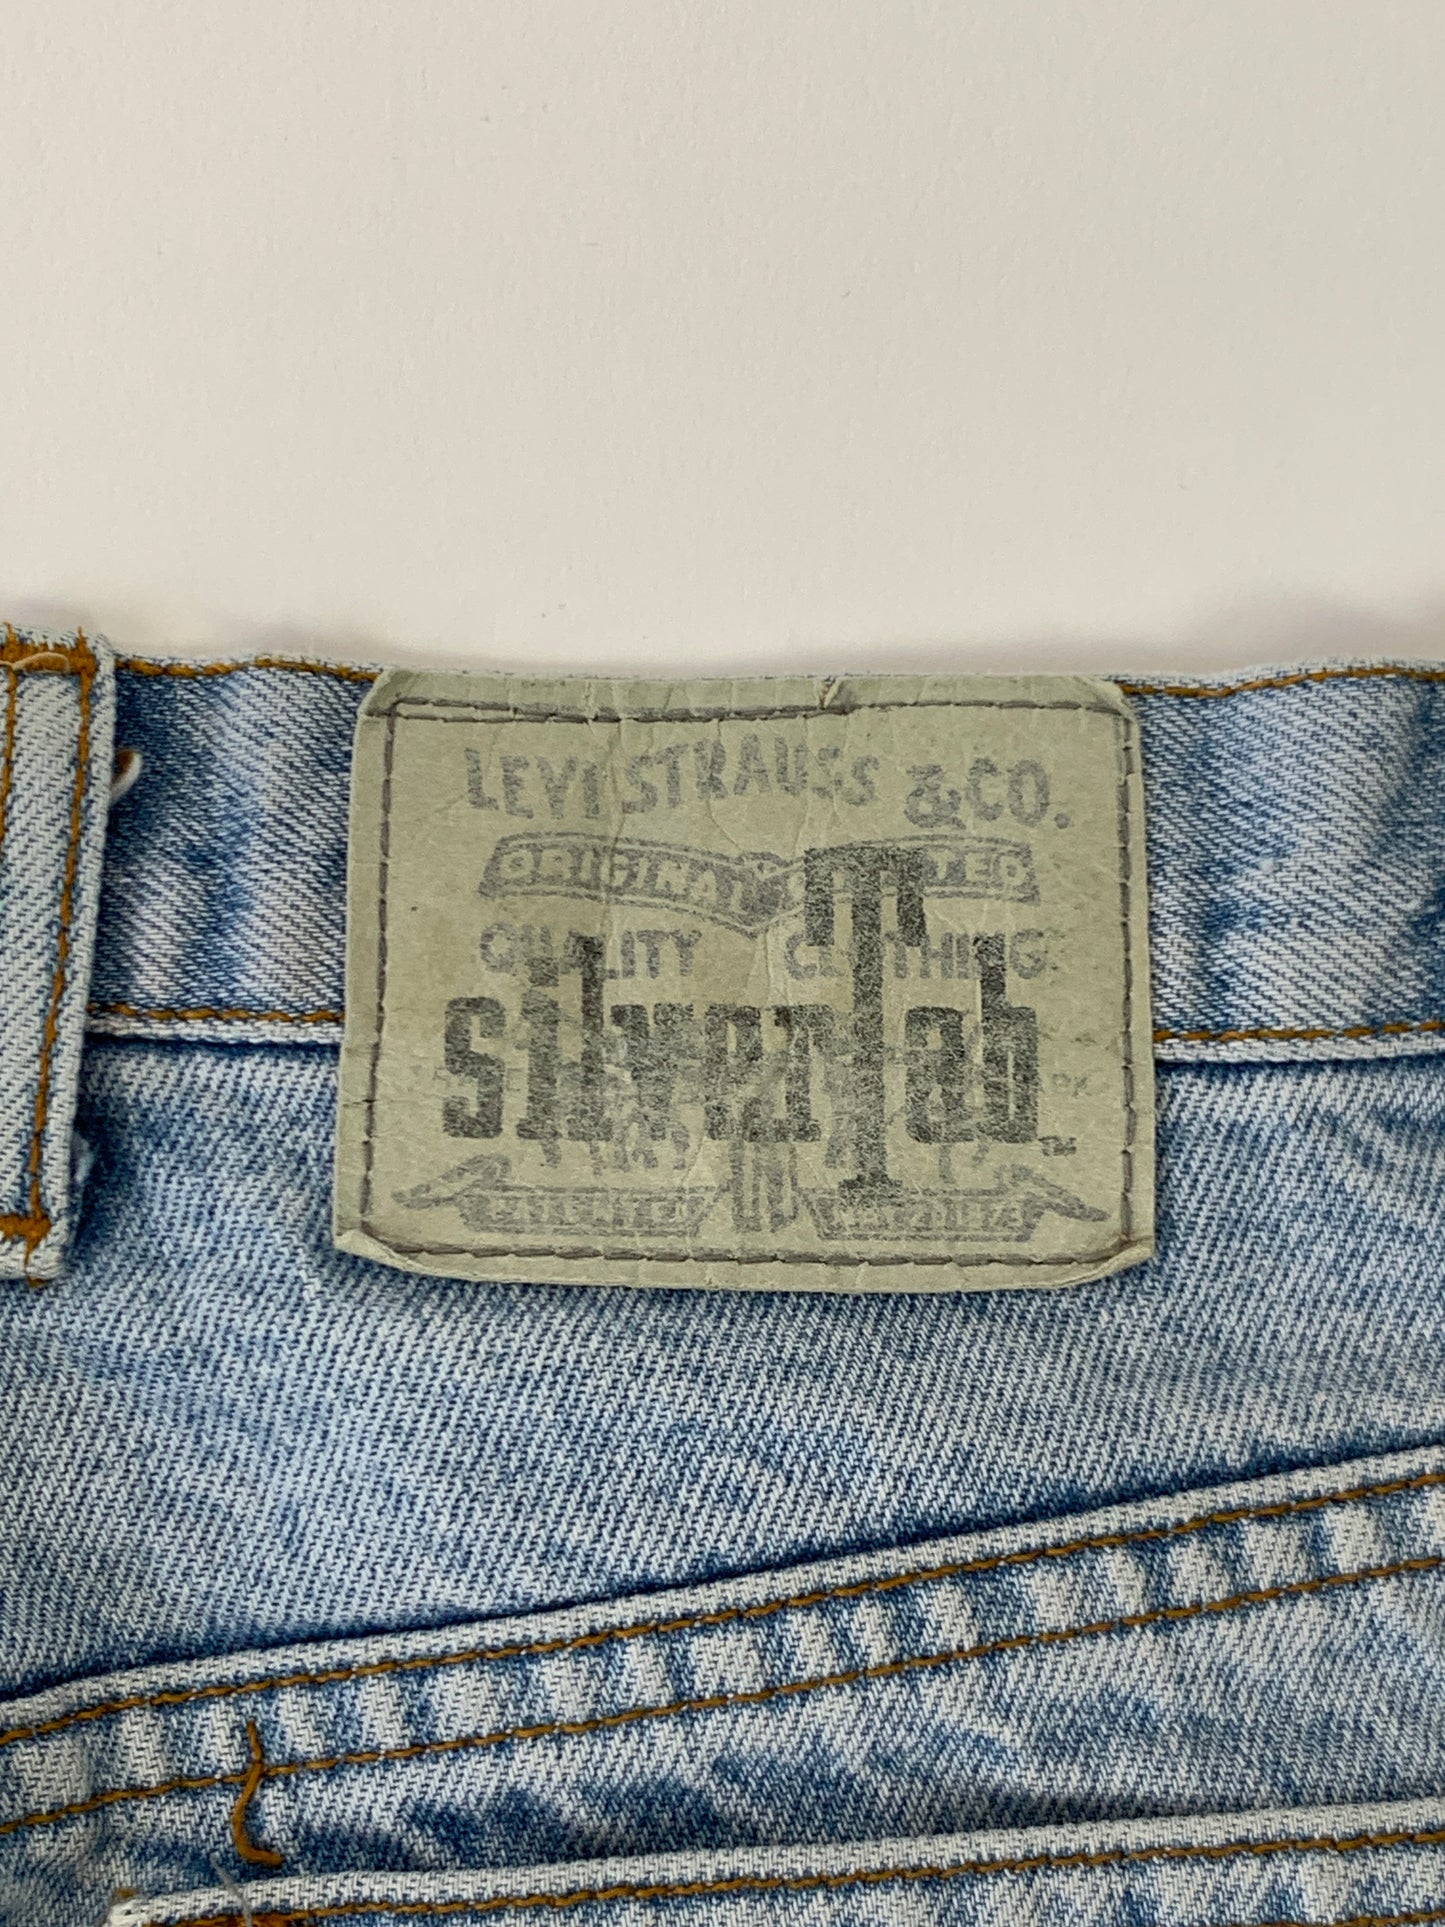 Levis Silvertab Baggy Vintage Jeans - 32